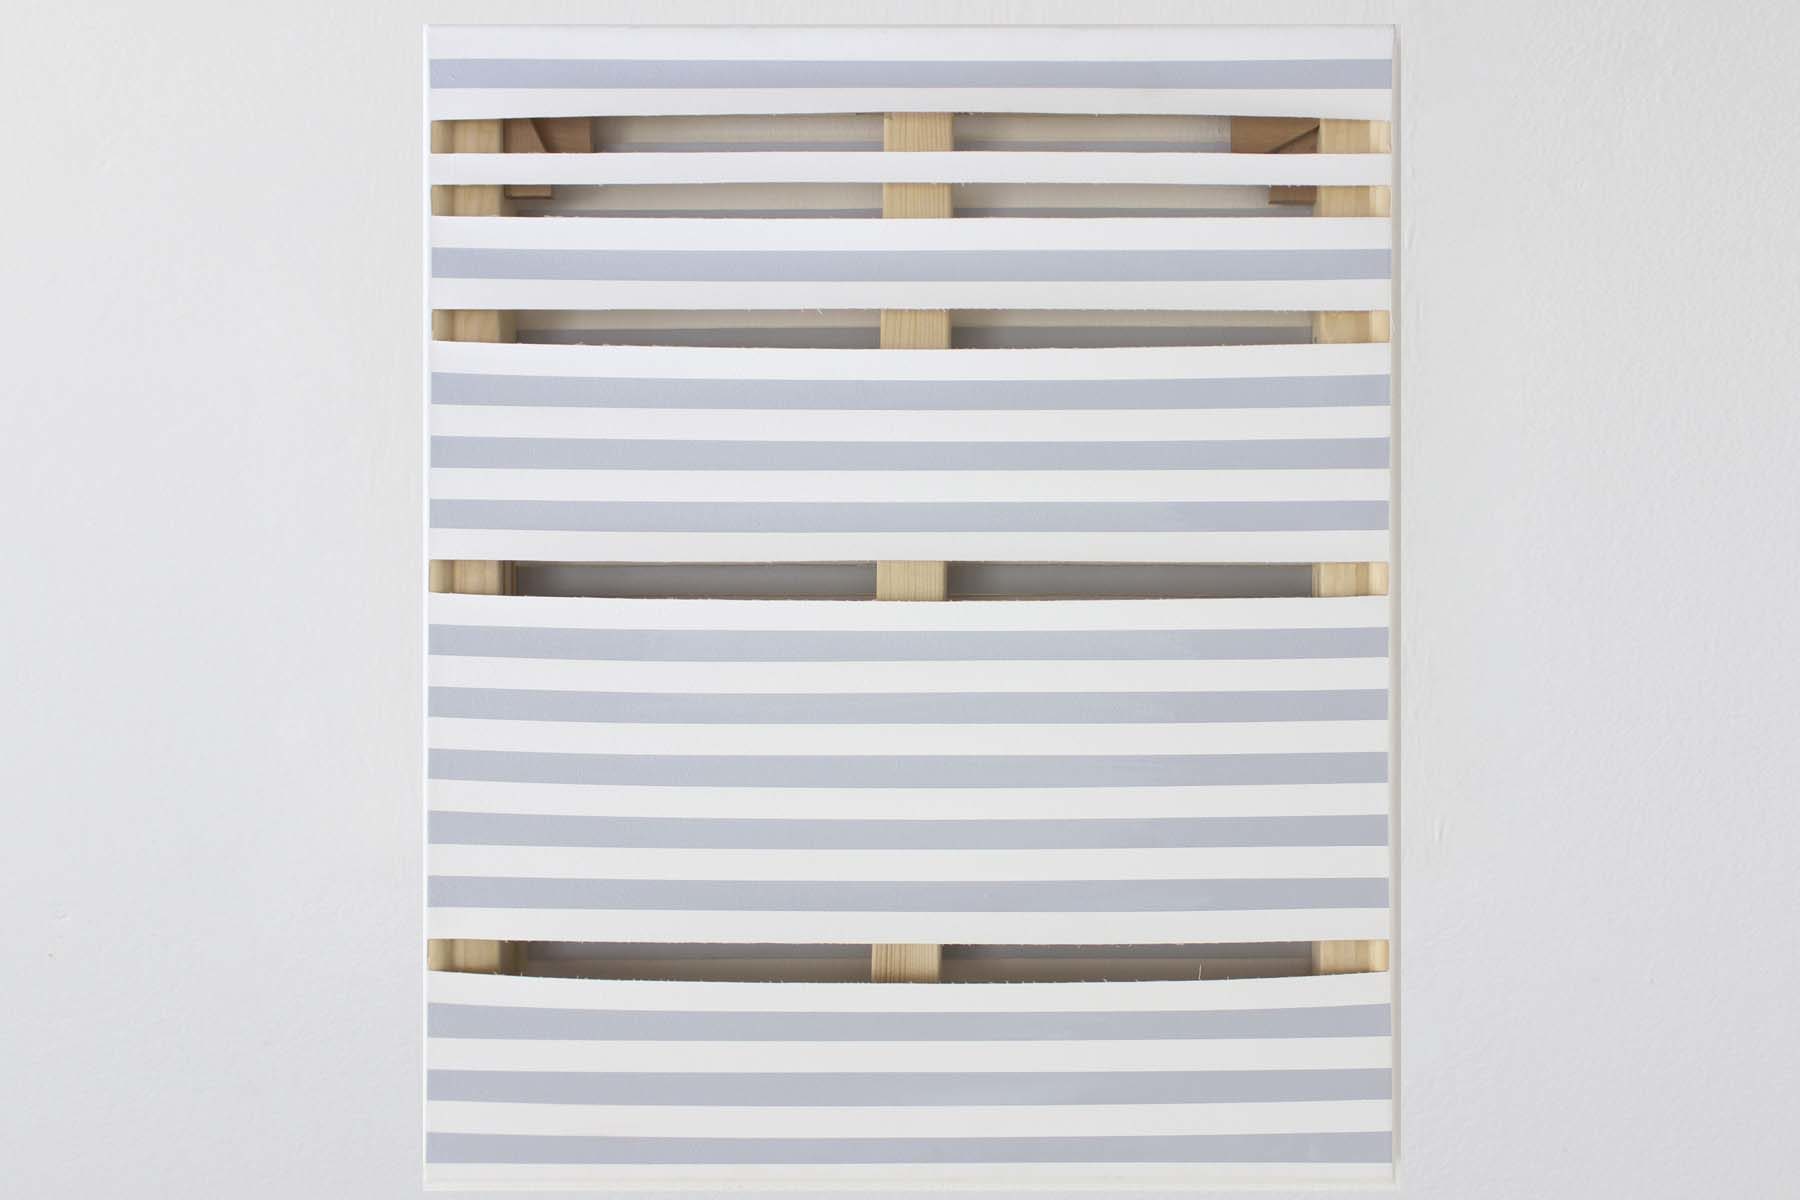 Johanna Binder, JKL Raum, 2014, acrylic on canvas, 70 x 60 x 4.5 cm